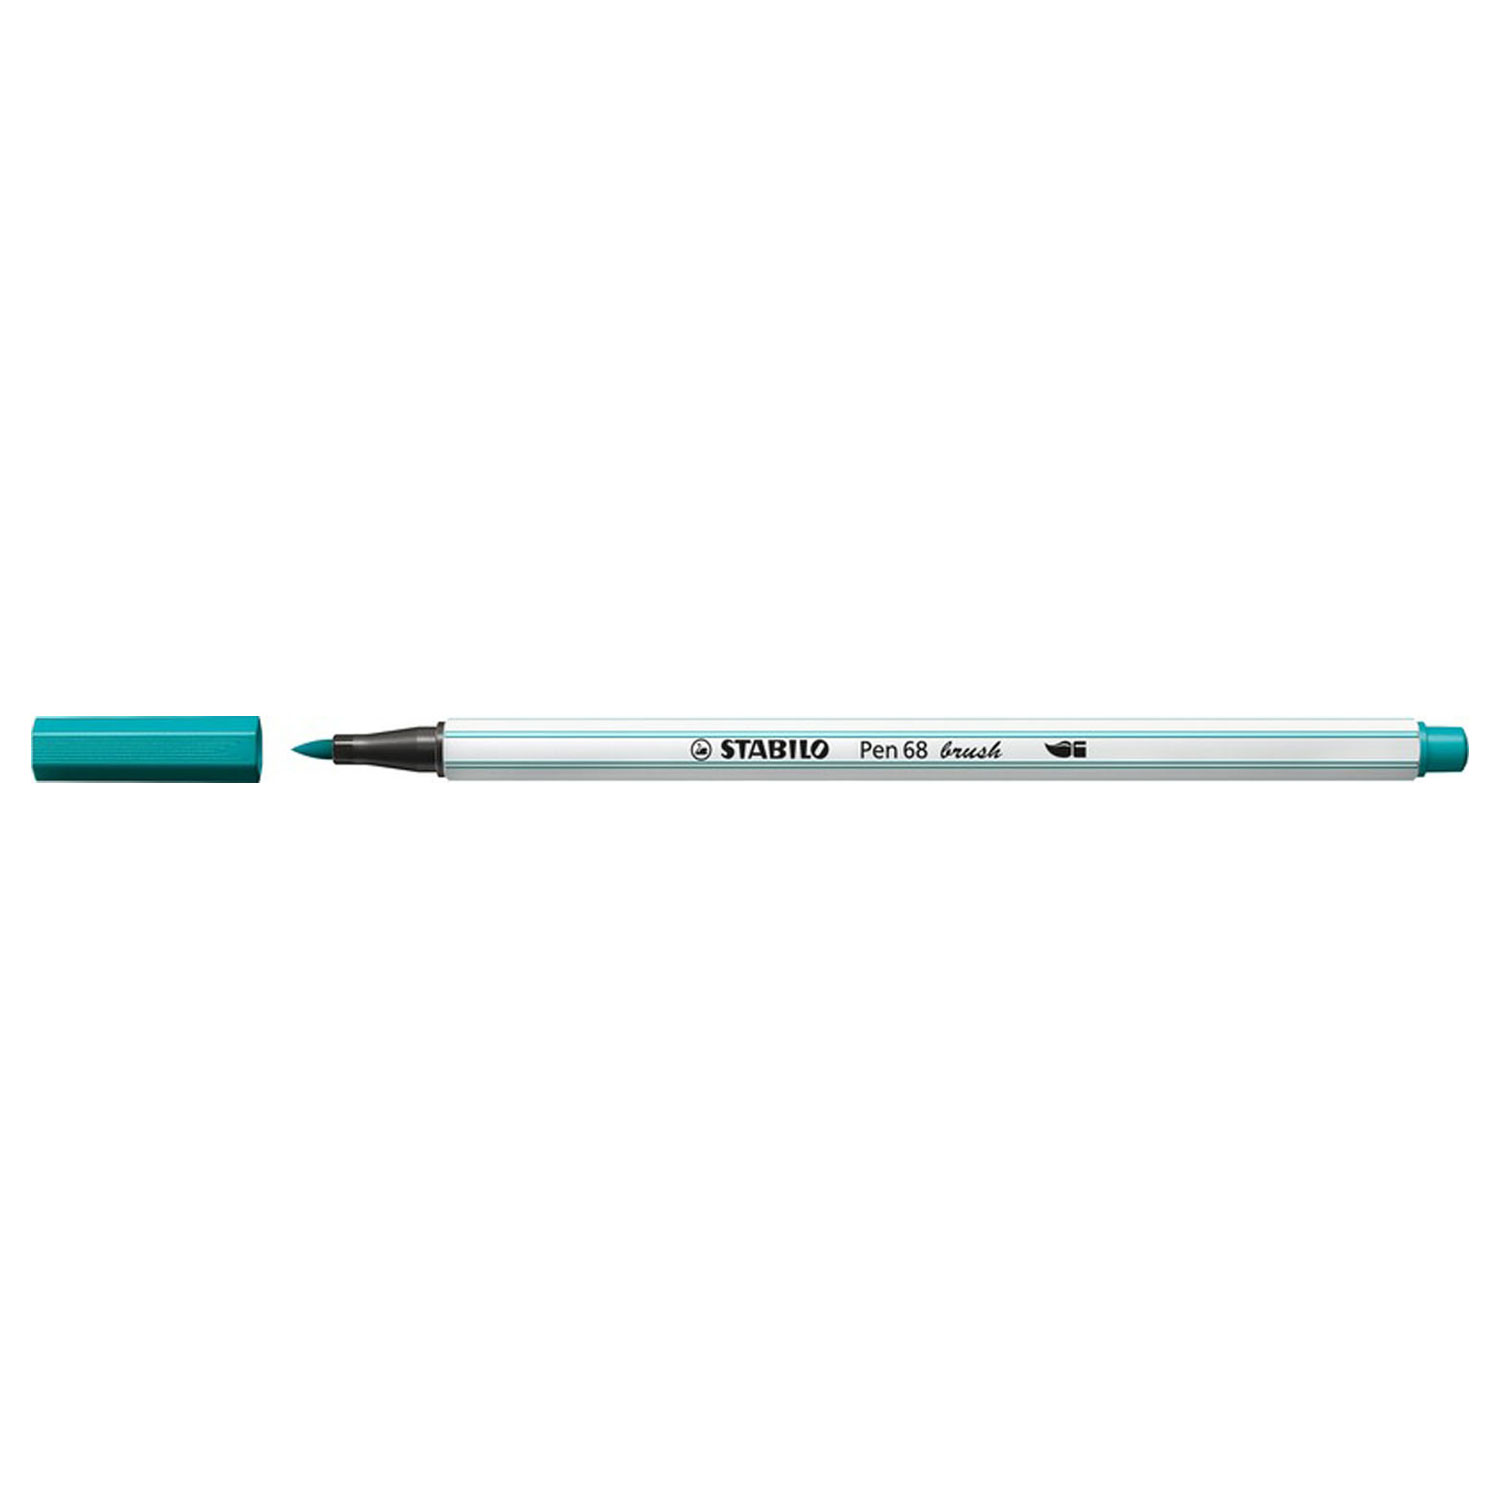 STABILO Pen 68 Brush - Feutre - Turquoise (51)